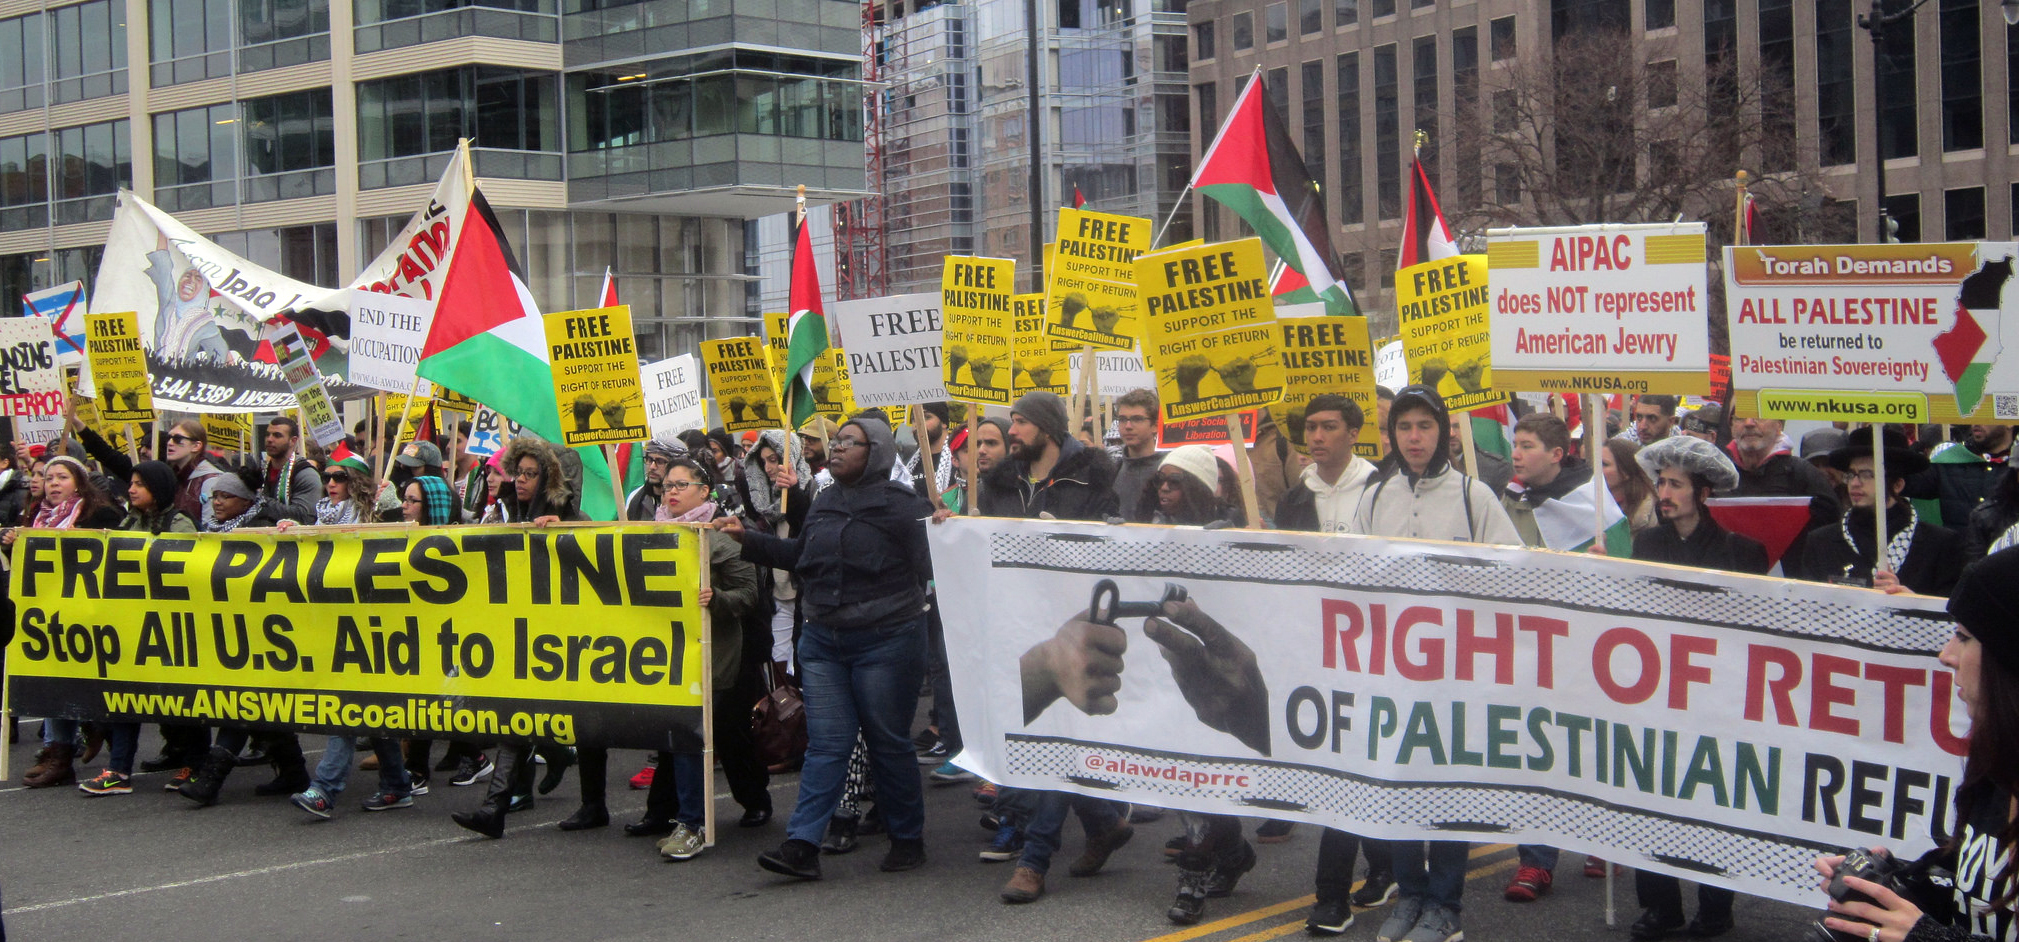 26 March, Washington Support Palestine in DC, Protest AIPAC Samidoun